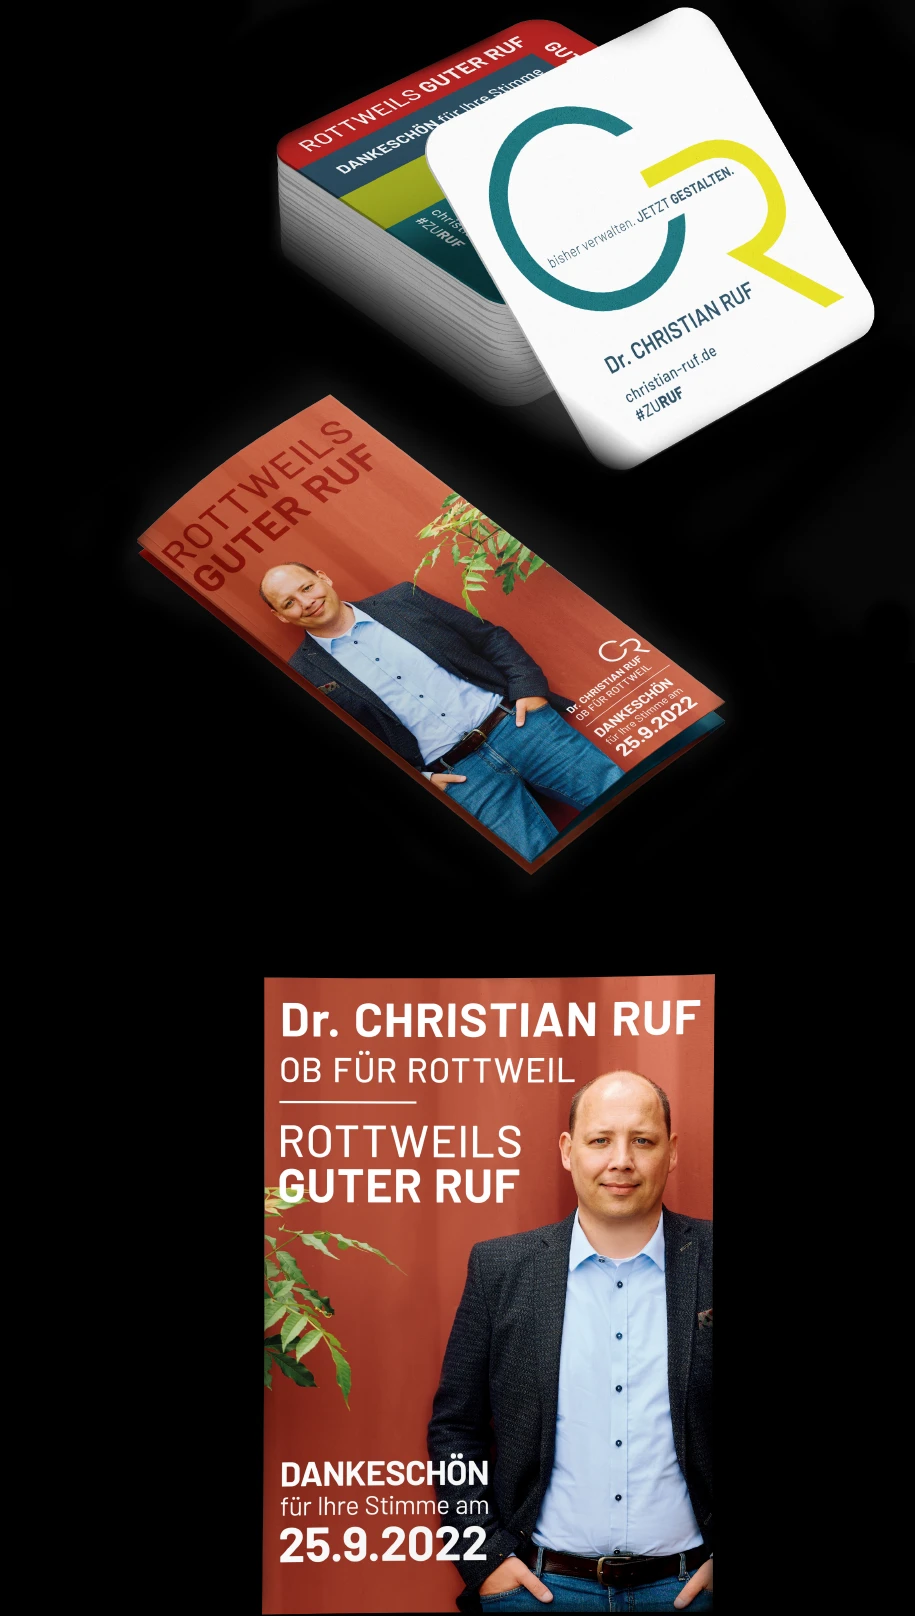 Printmedien der Wahlkampagne des rottweiler Oberbürgermeisters Christian Ruf